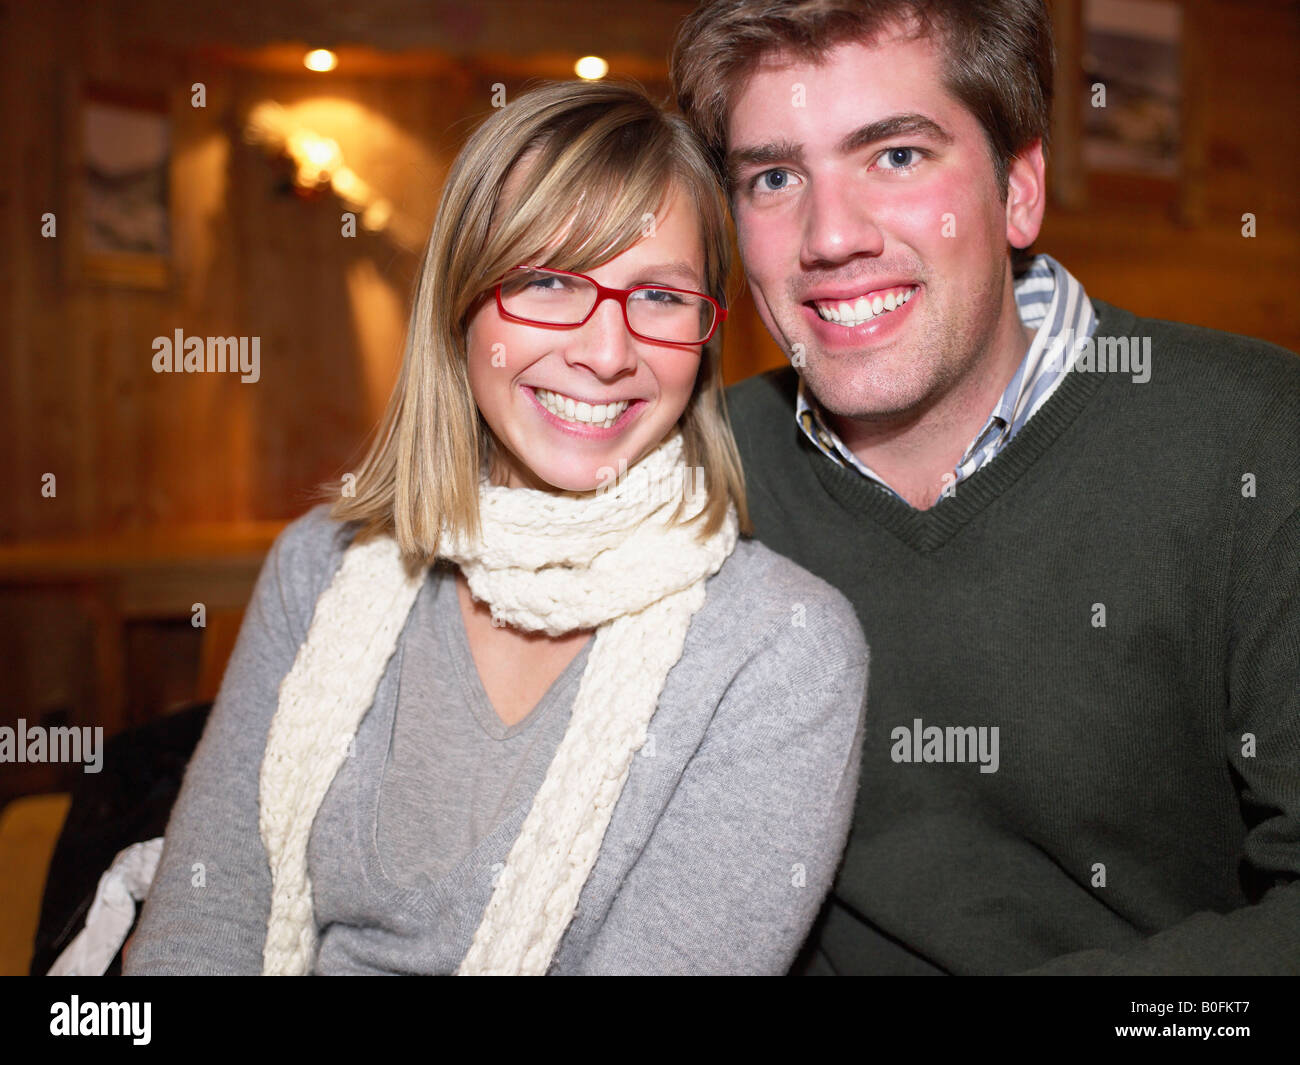 Smiling couple in restaurant Stock Photo